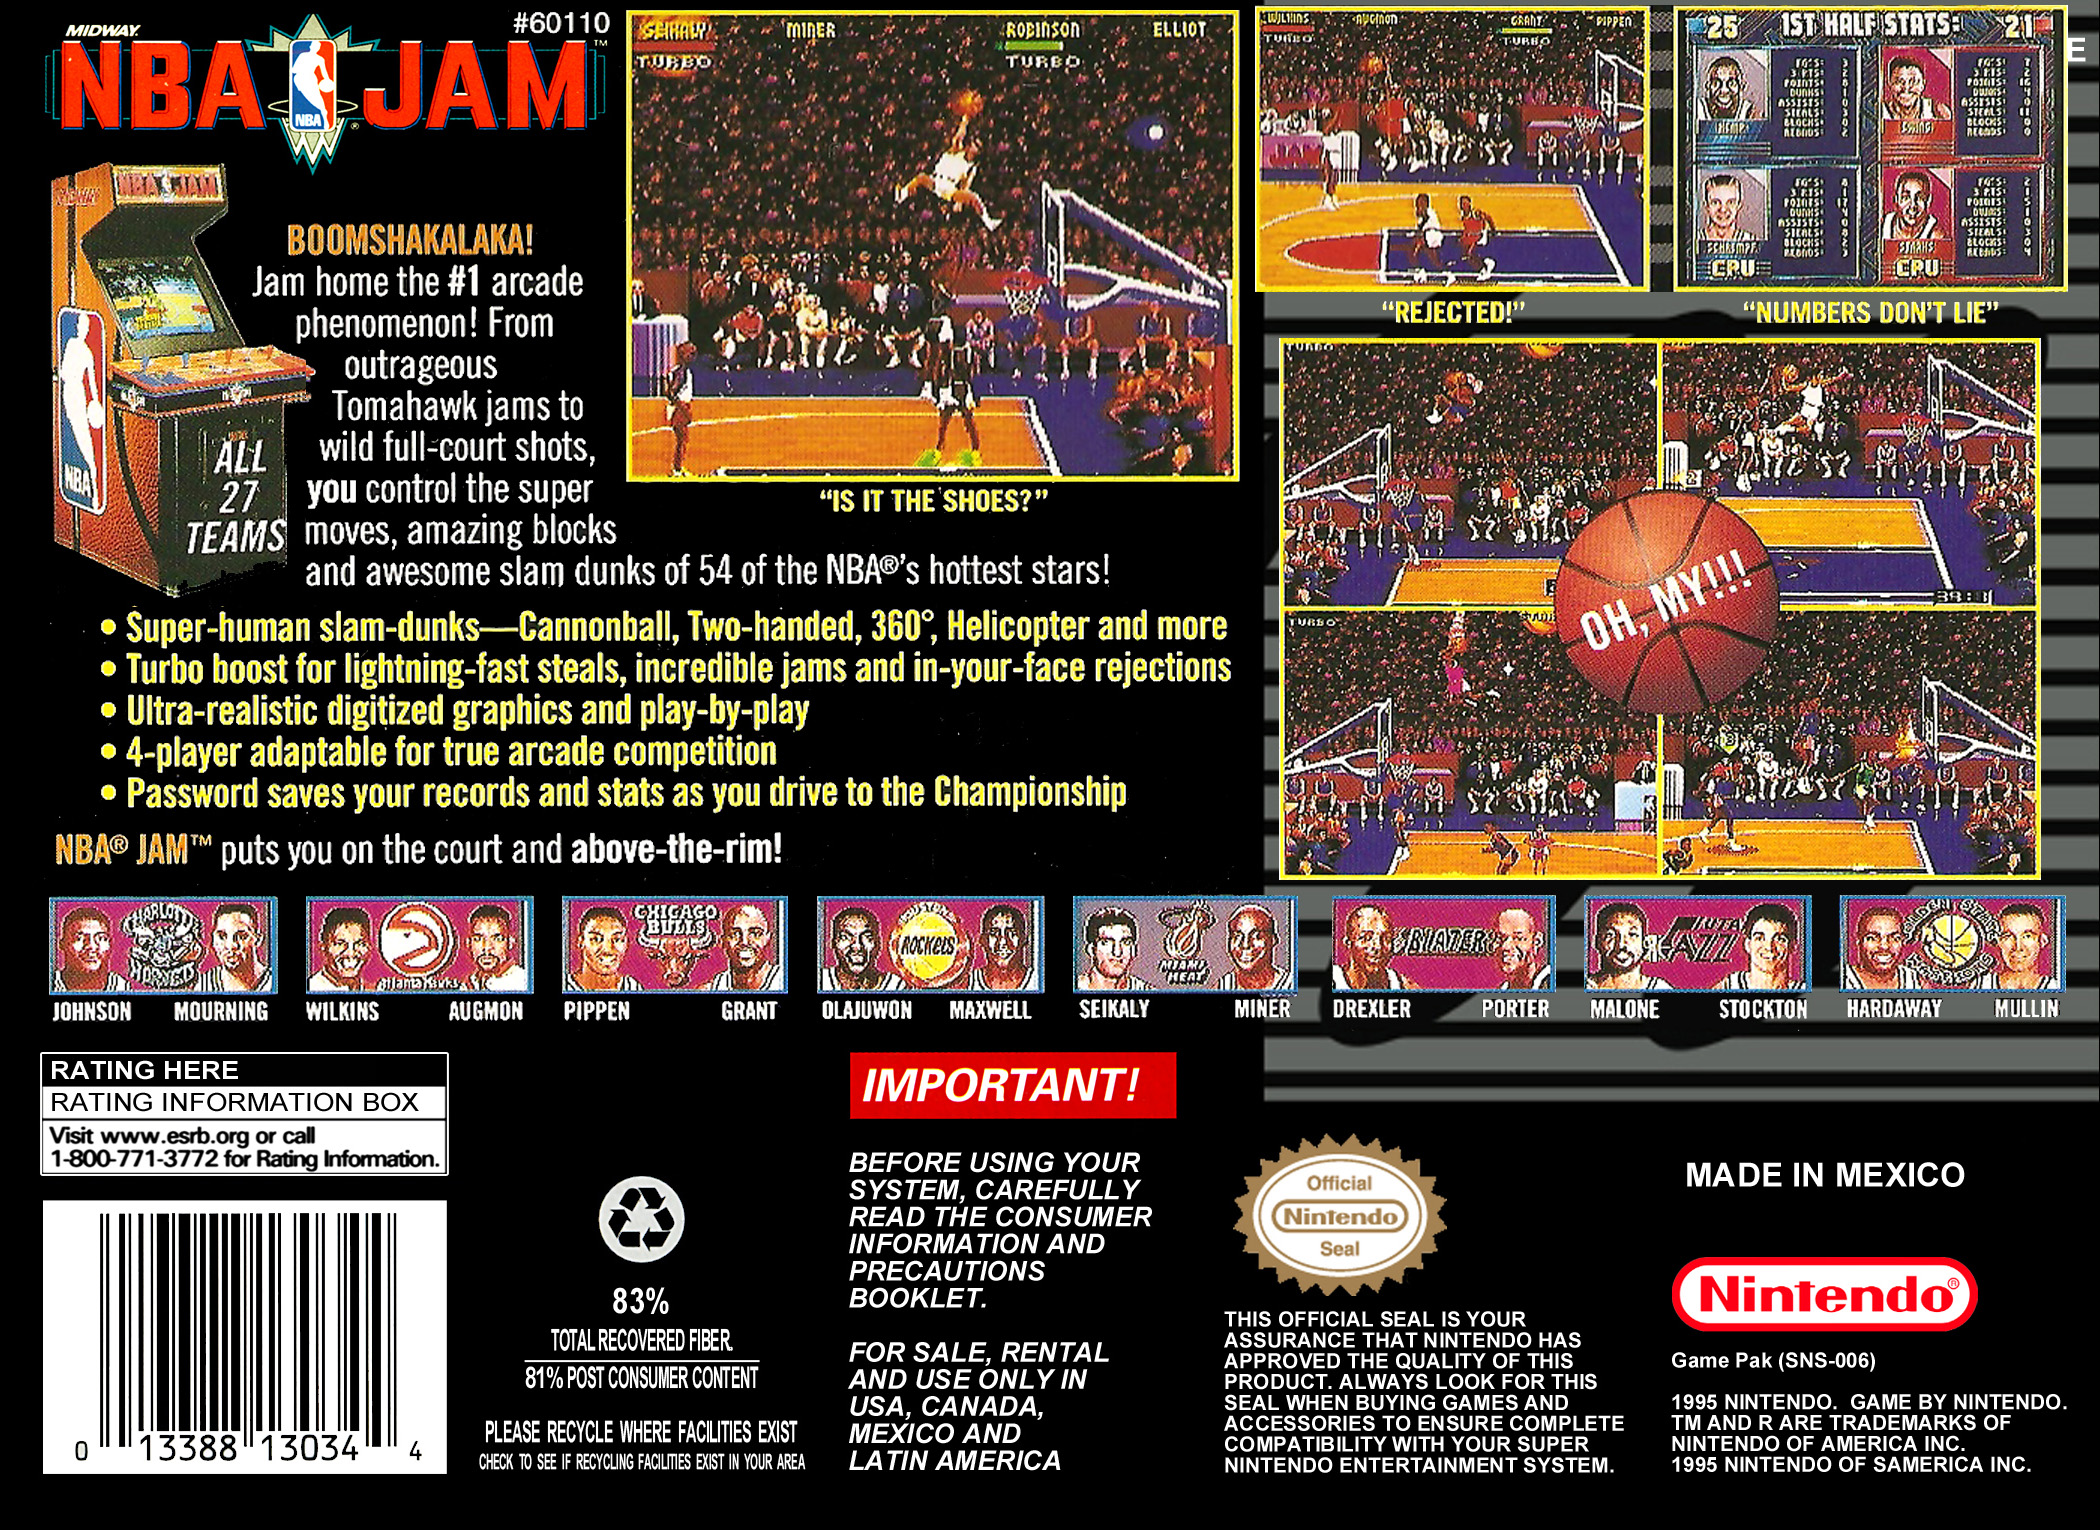 Tony Hawk's Downhill Jam Images - LaunchBox Games Database